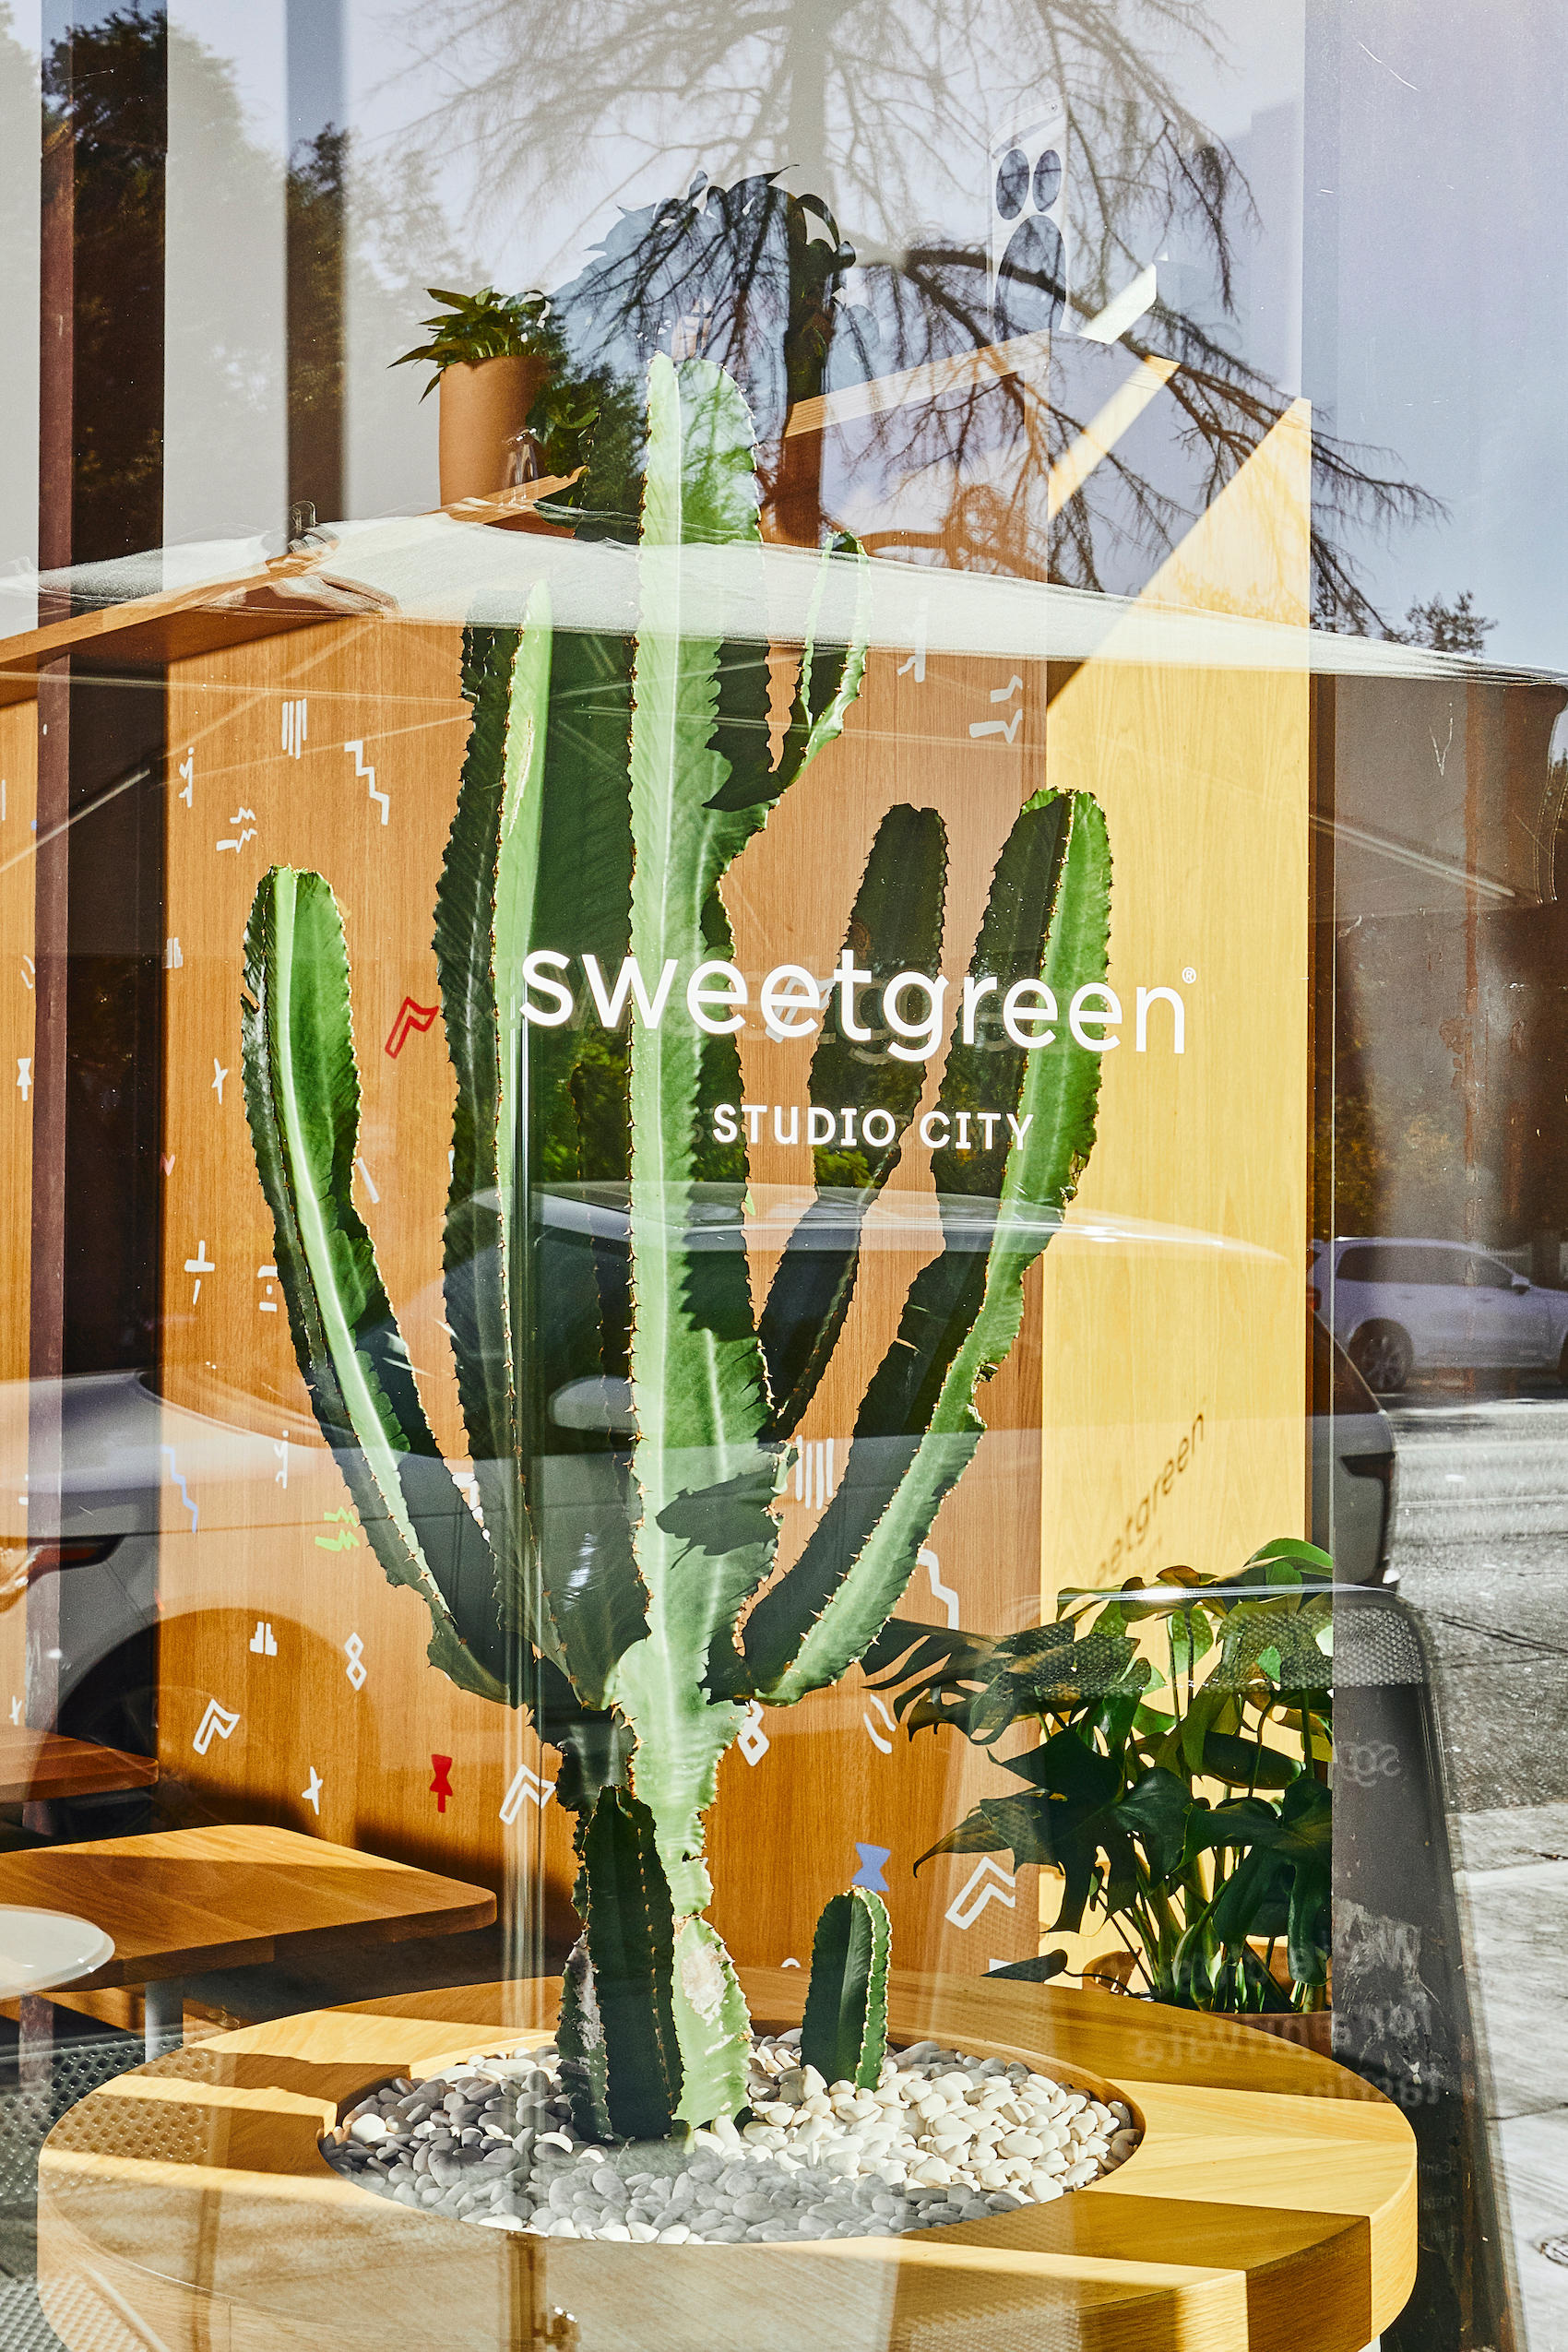 sweetgreen Photo